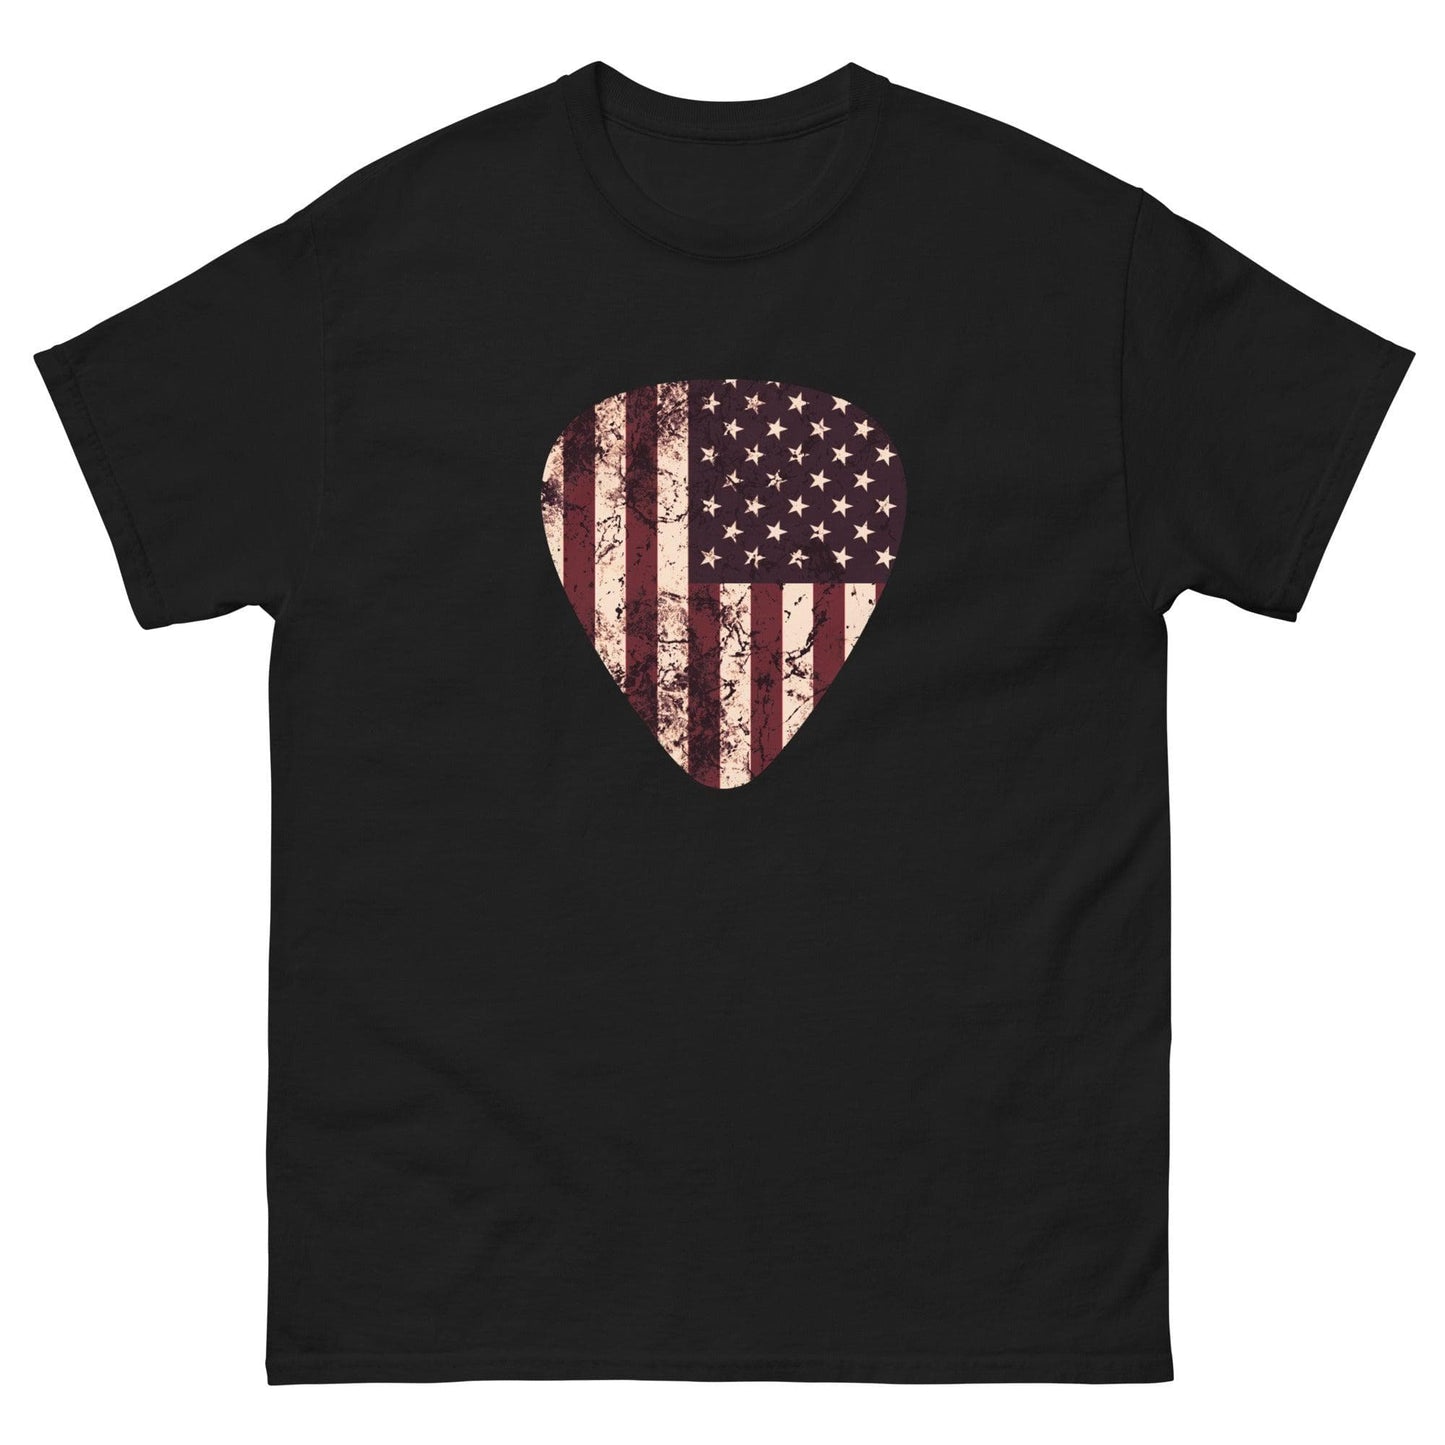 Vintage American Flag Guitar Pick T-shirt Black / S